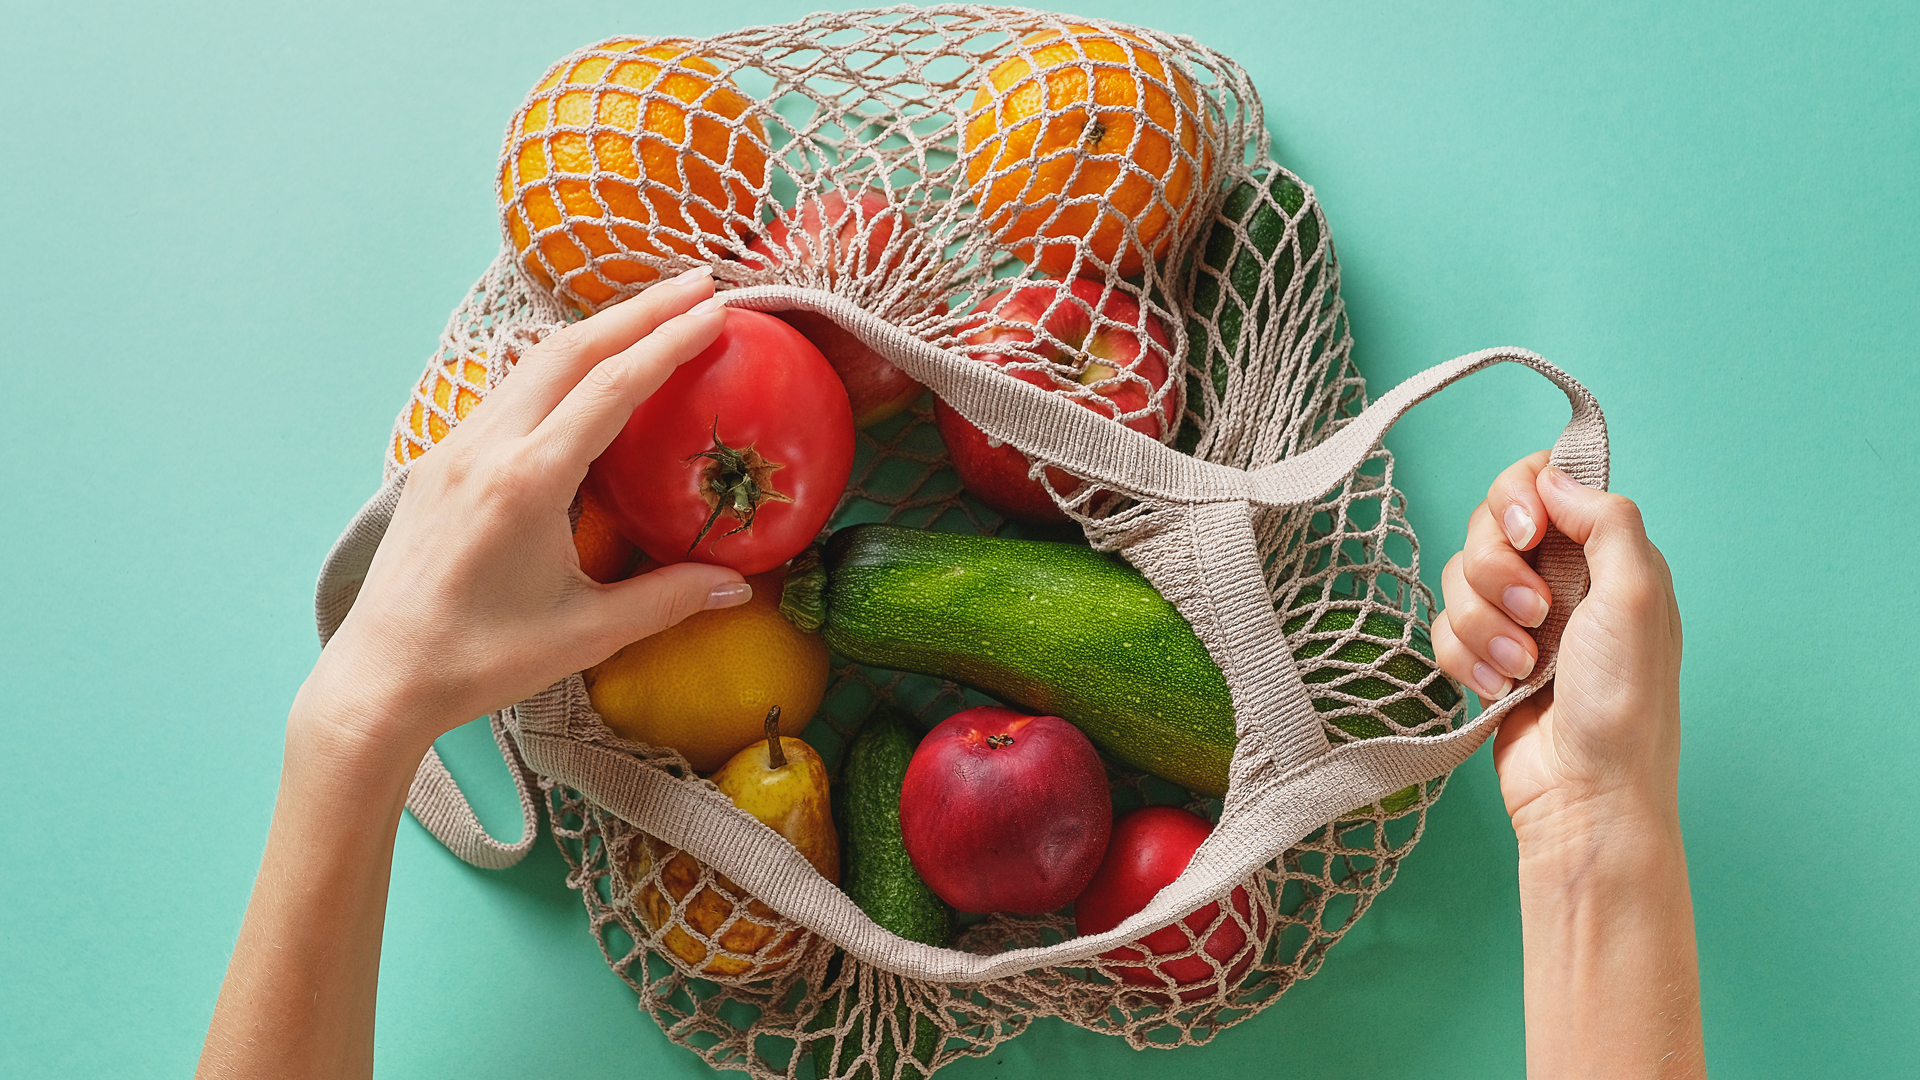 Fresh fruit, veges & groceries - DH Supermarket Manurewa